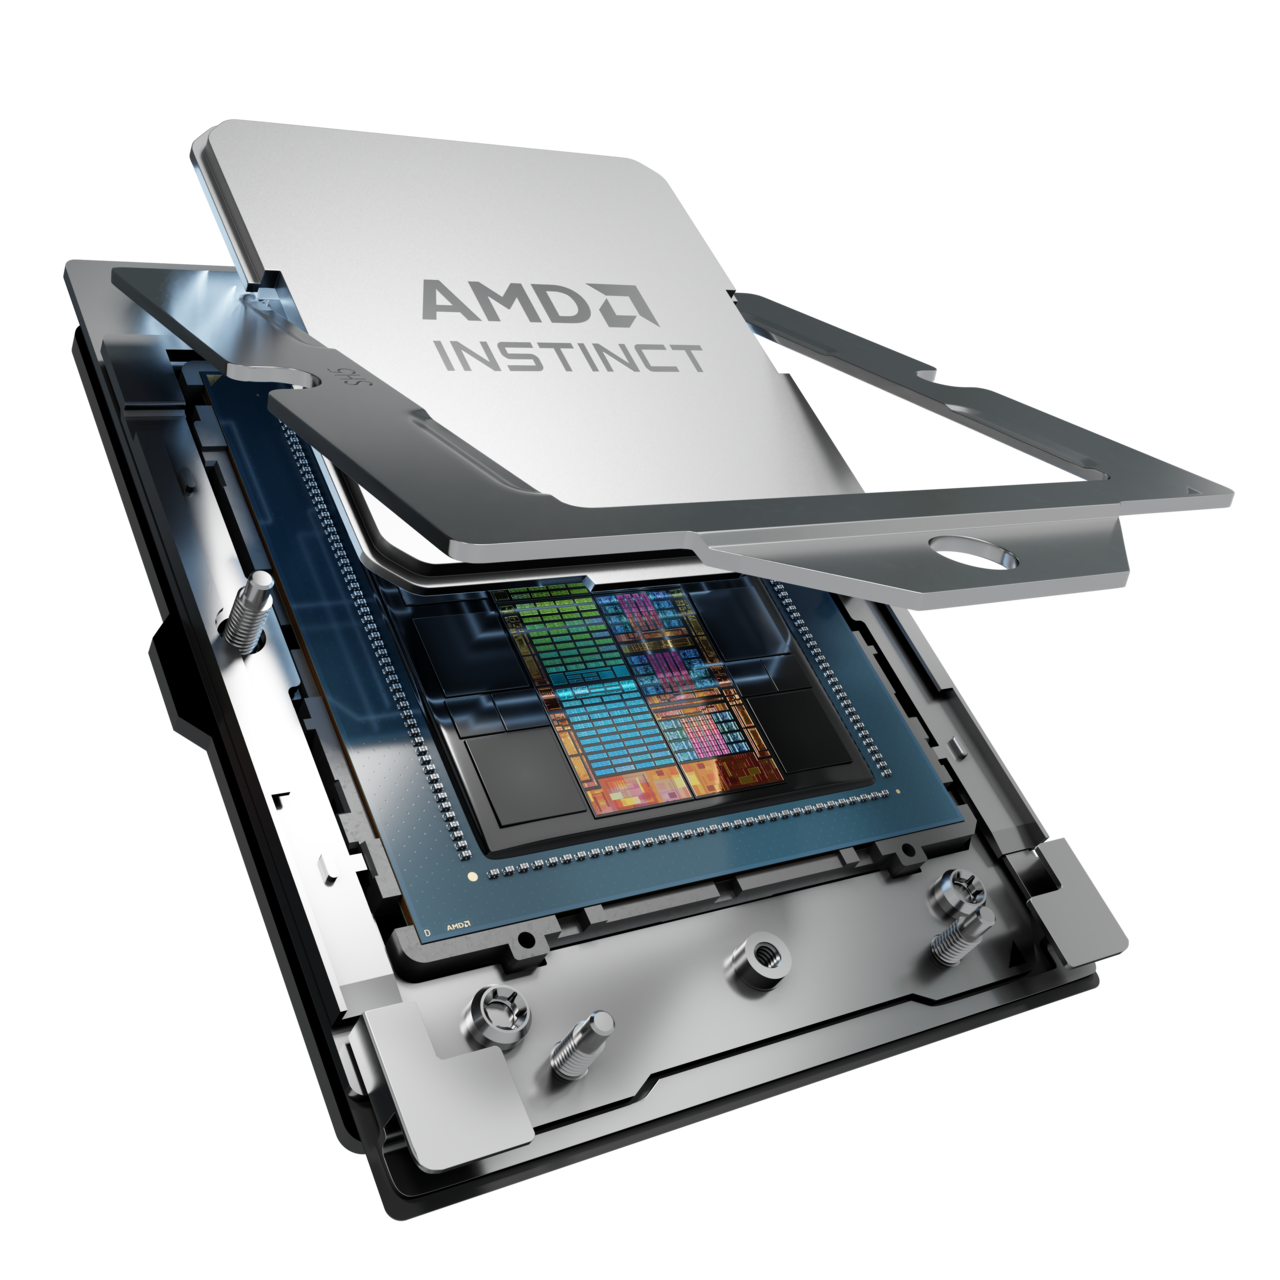 AMD Instinct MI300A